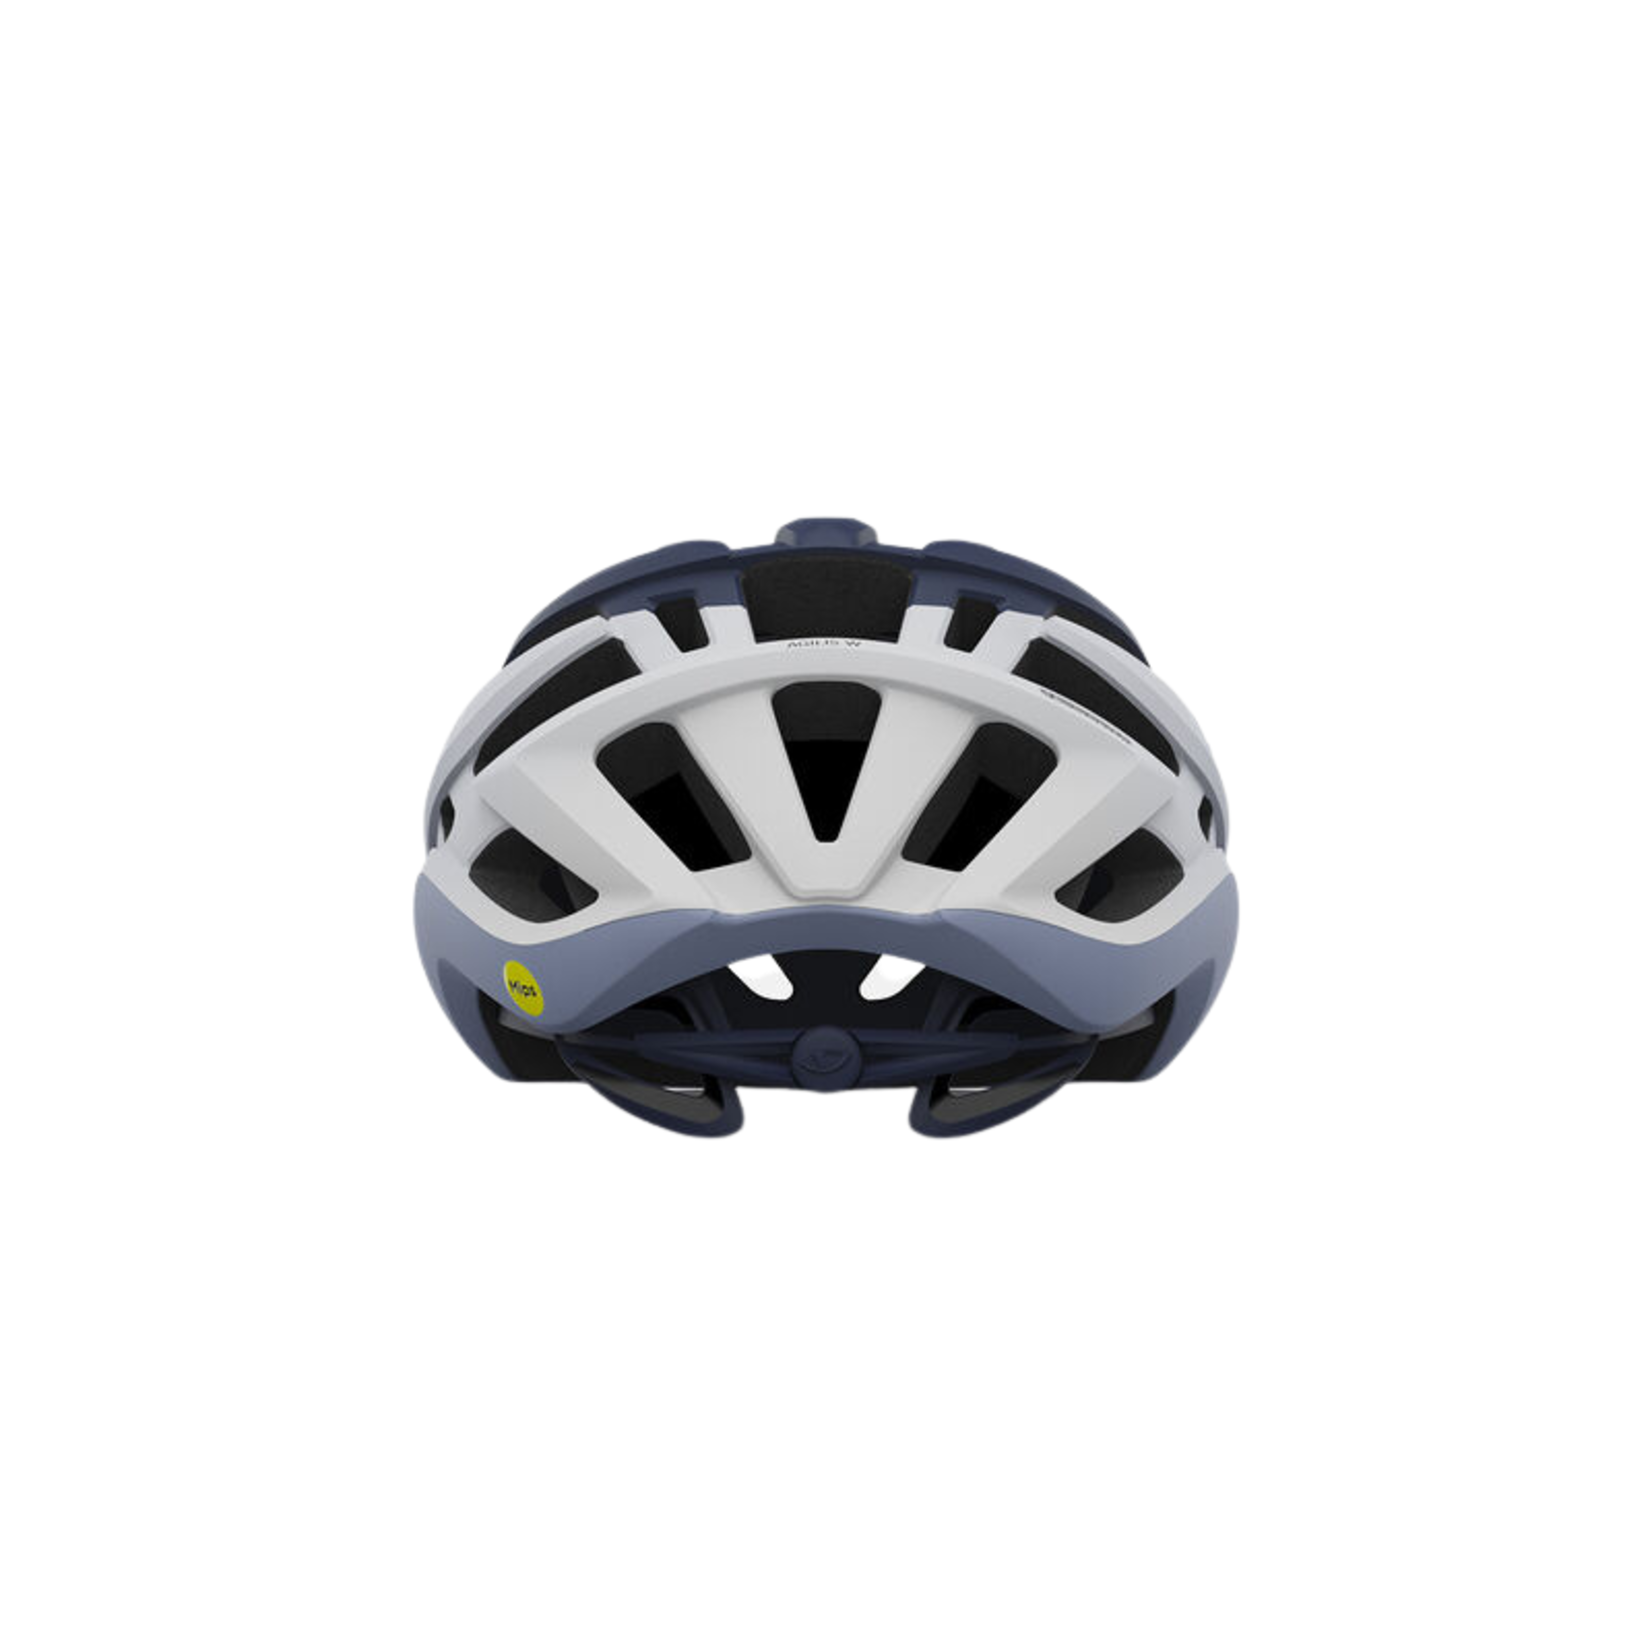 Giro Giro Agilis MIPS Helmet Women's